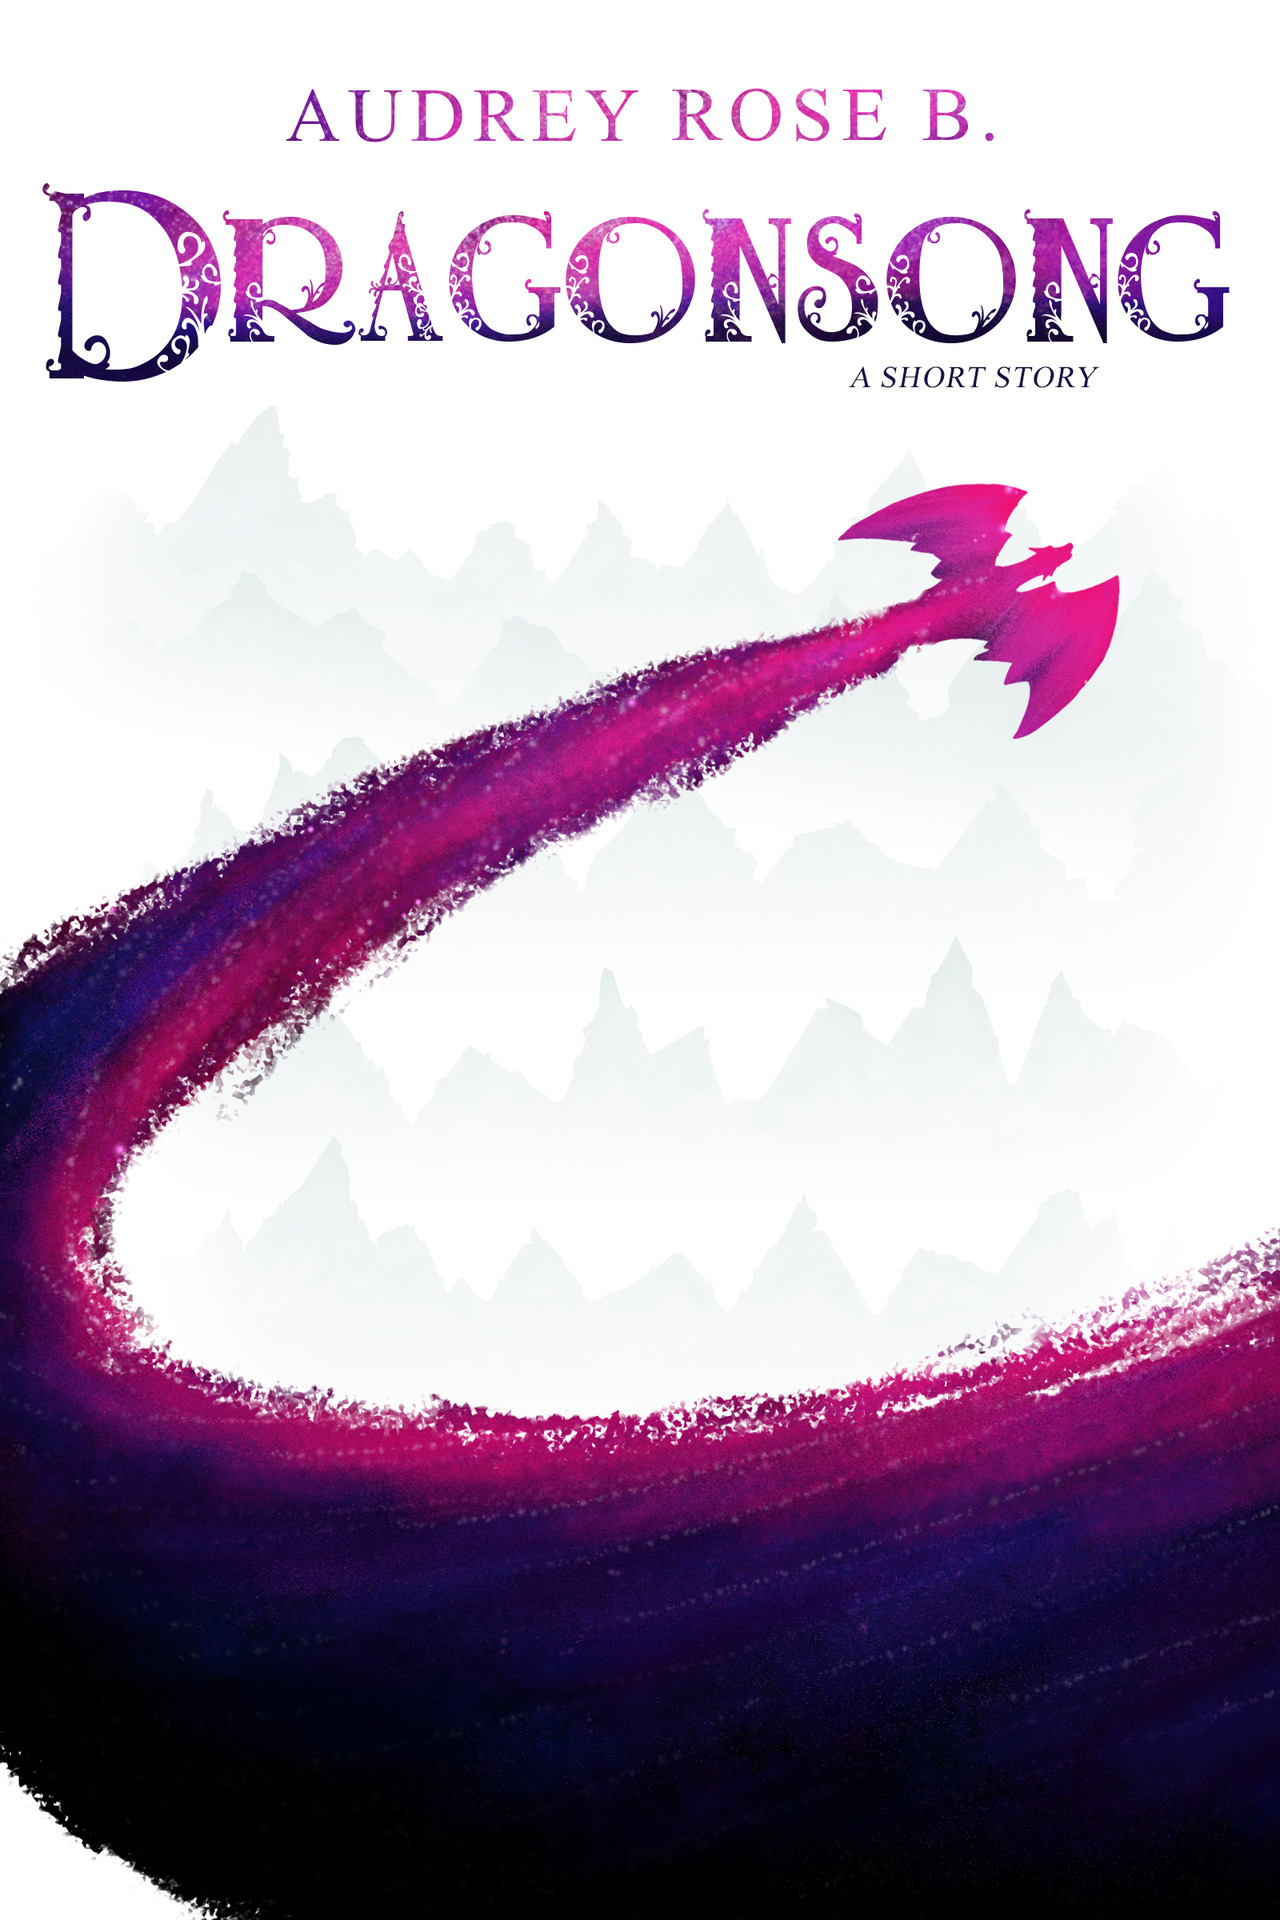 dragonsong series